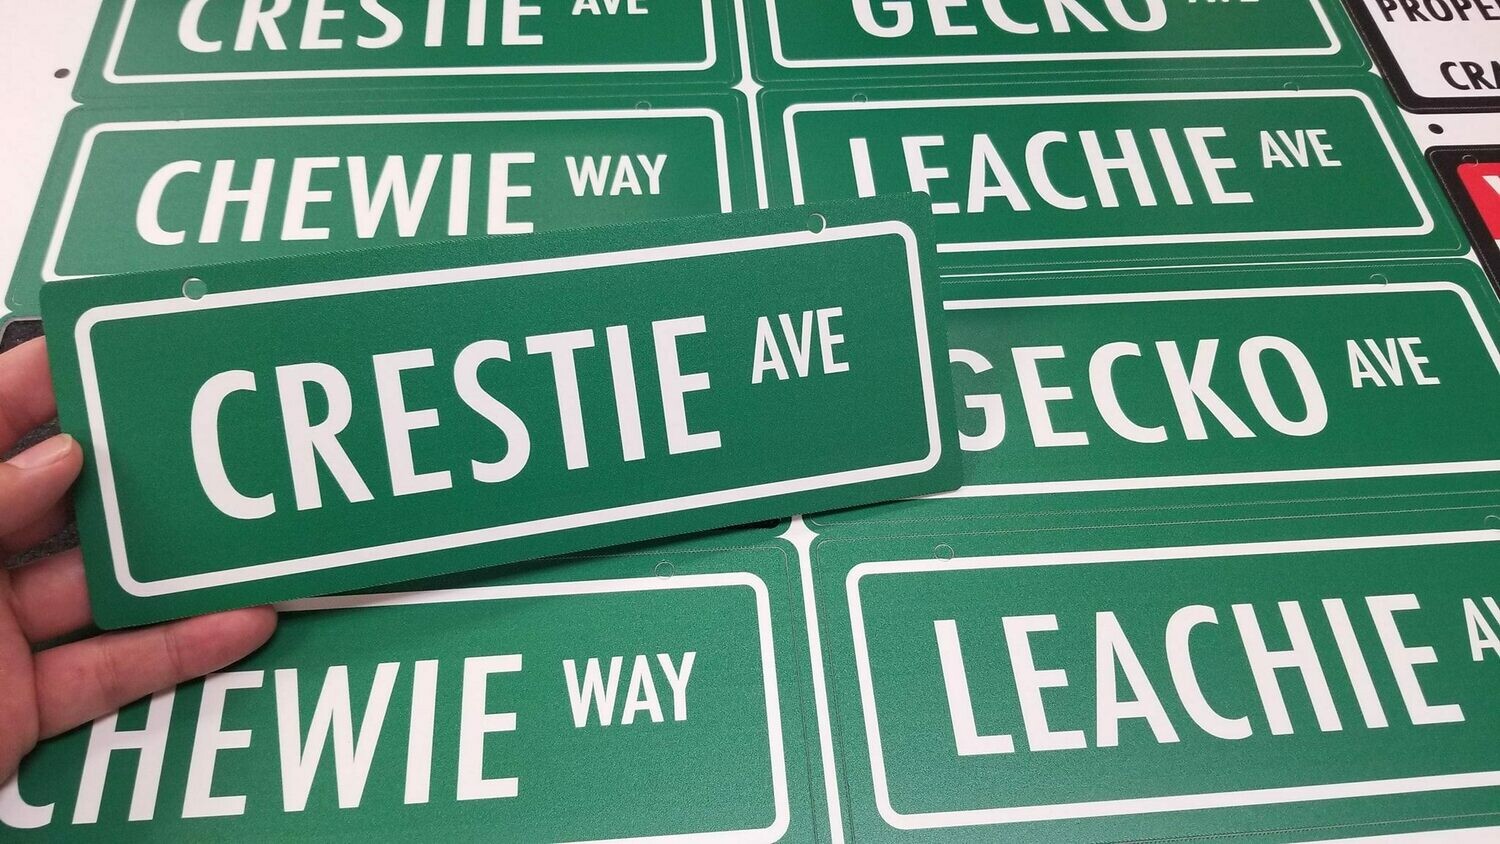 Green Street Sign - Crestie Avenue.